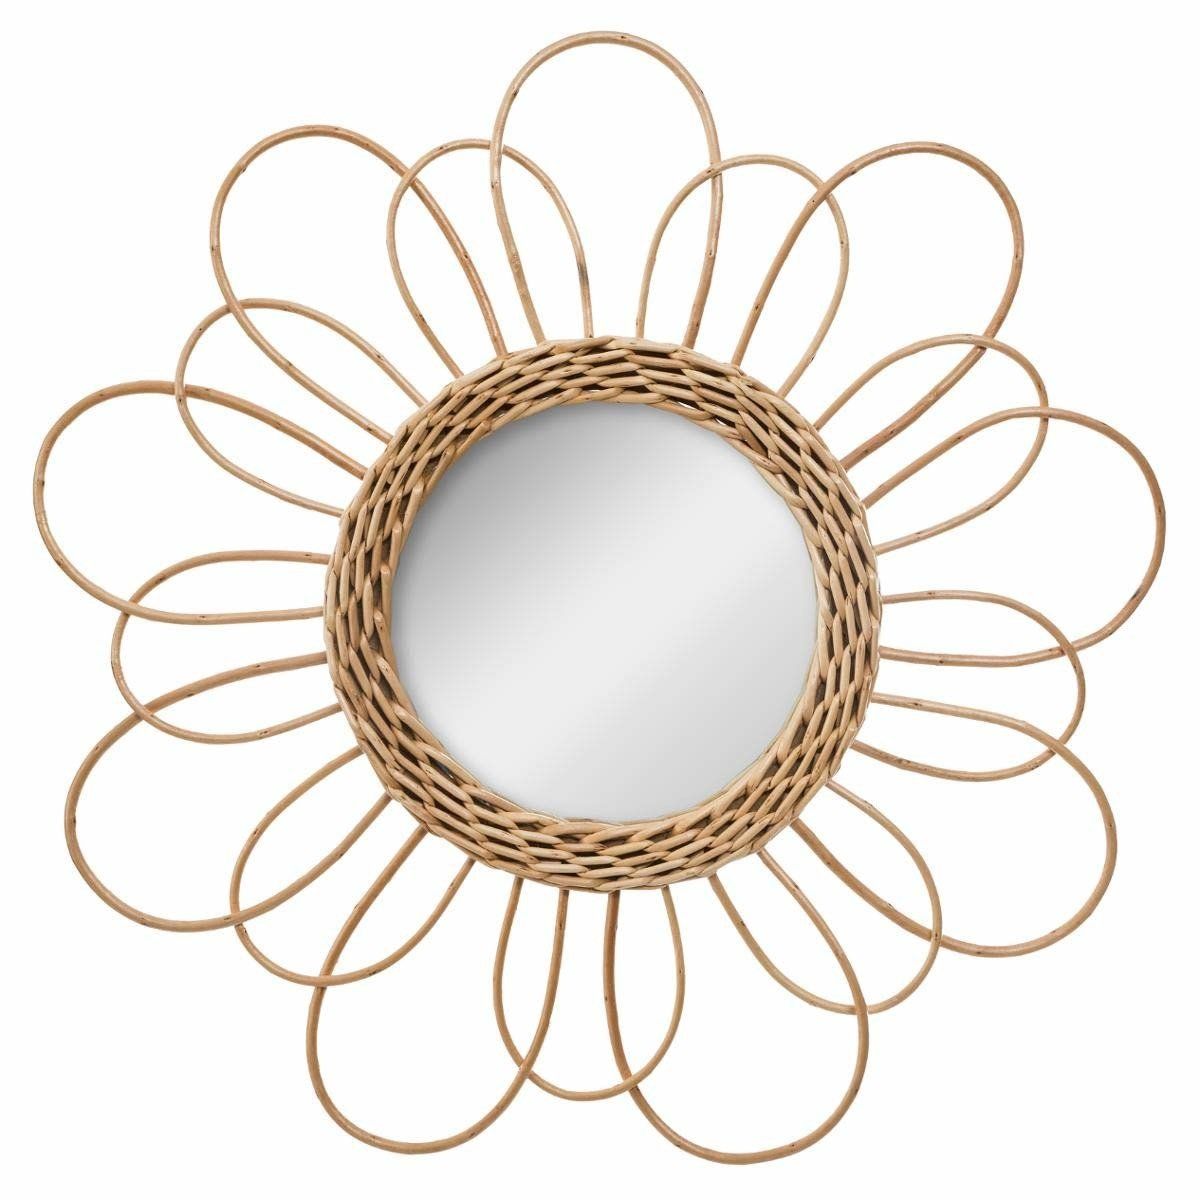 DekorStyle Proutěné zrcadlo Květ 38 cm hnědý - EDAXO.CZ s.r.o.